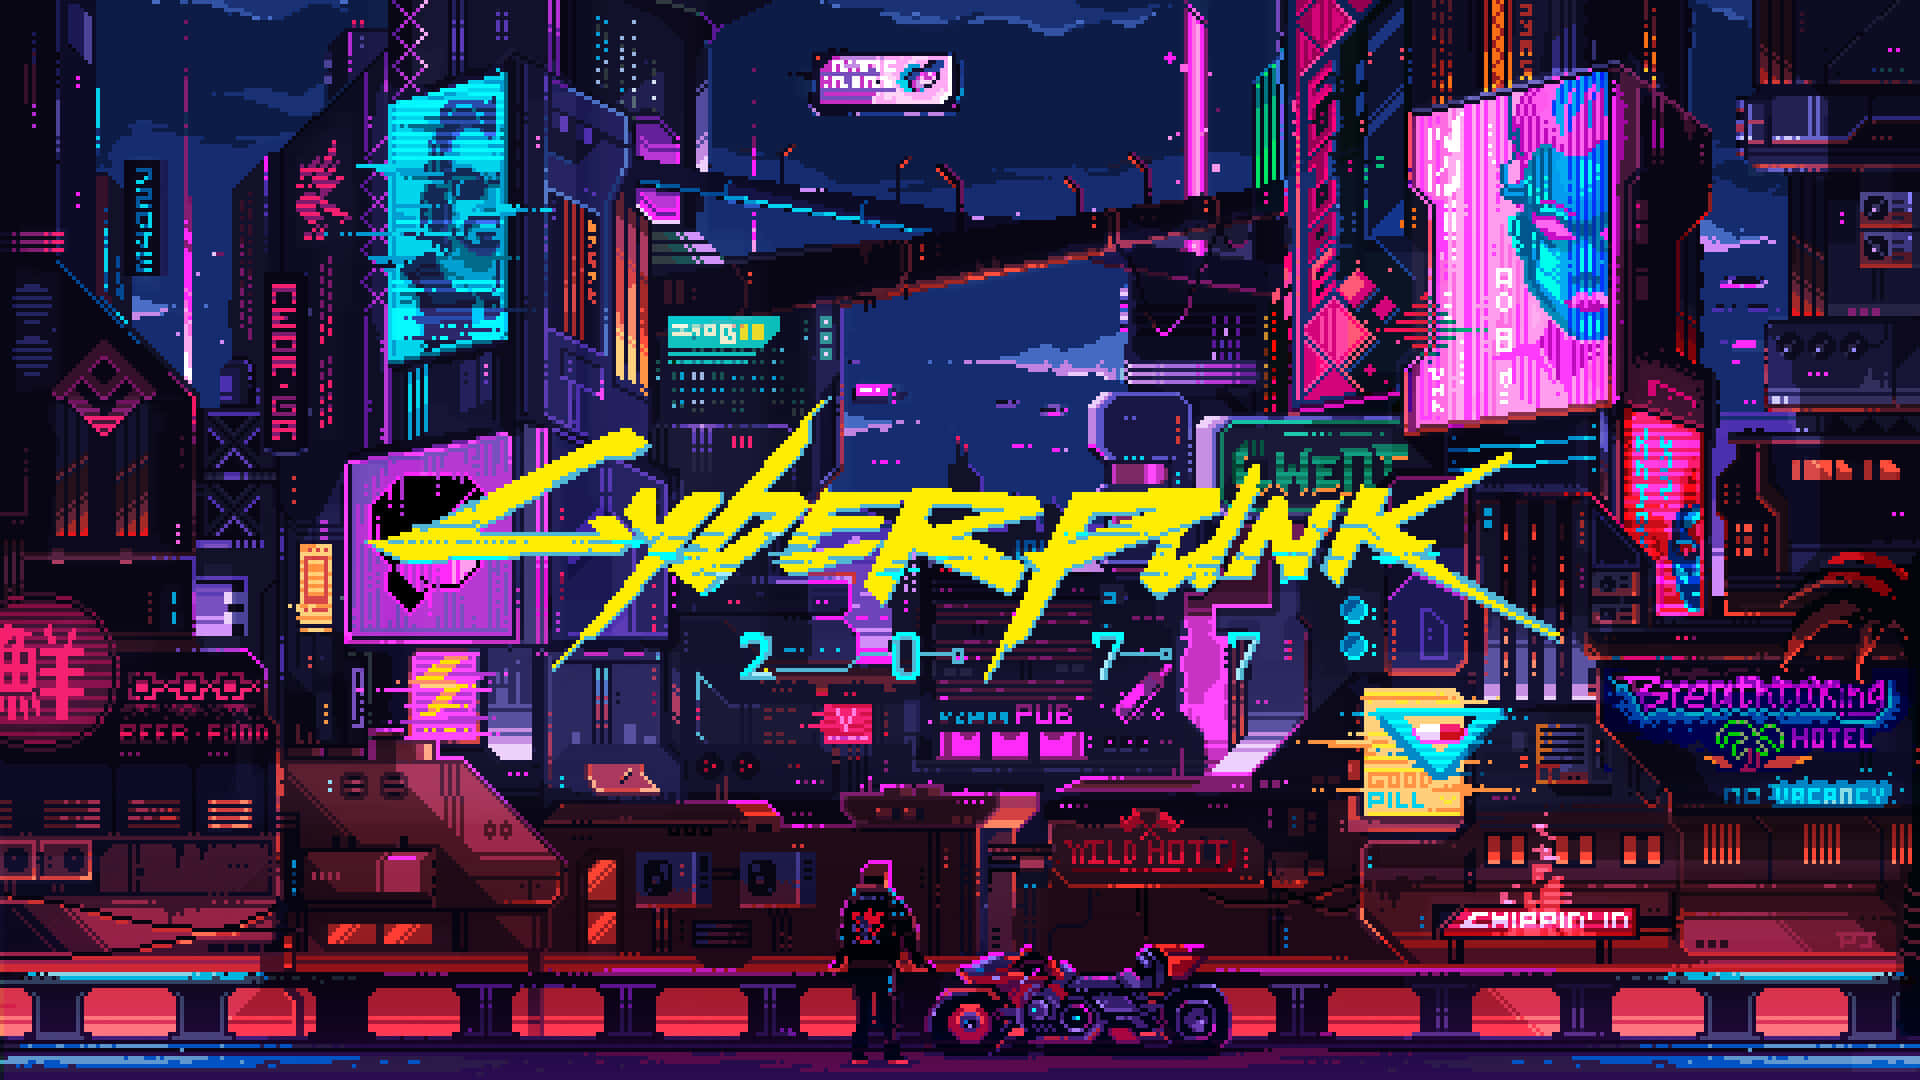 100+] Cyberpunk 1920x1080 Wallpapers